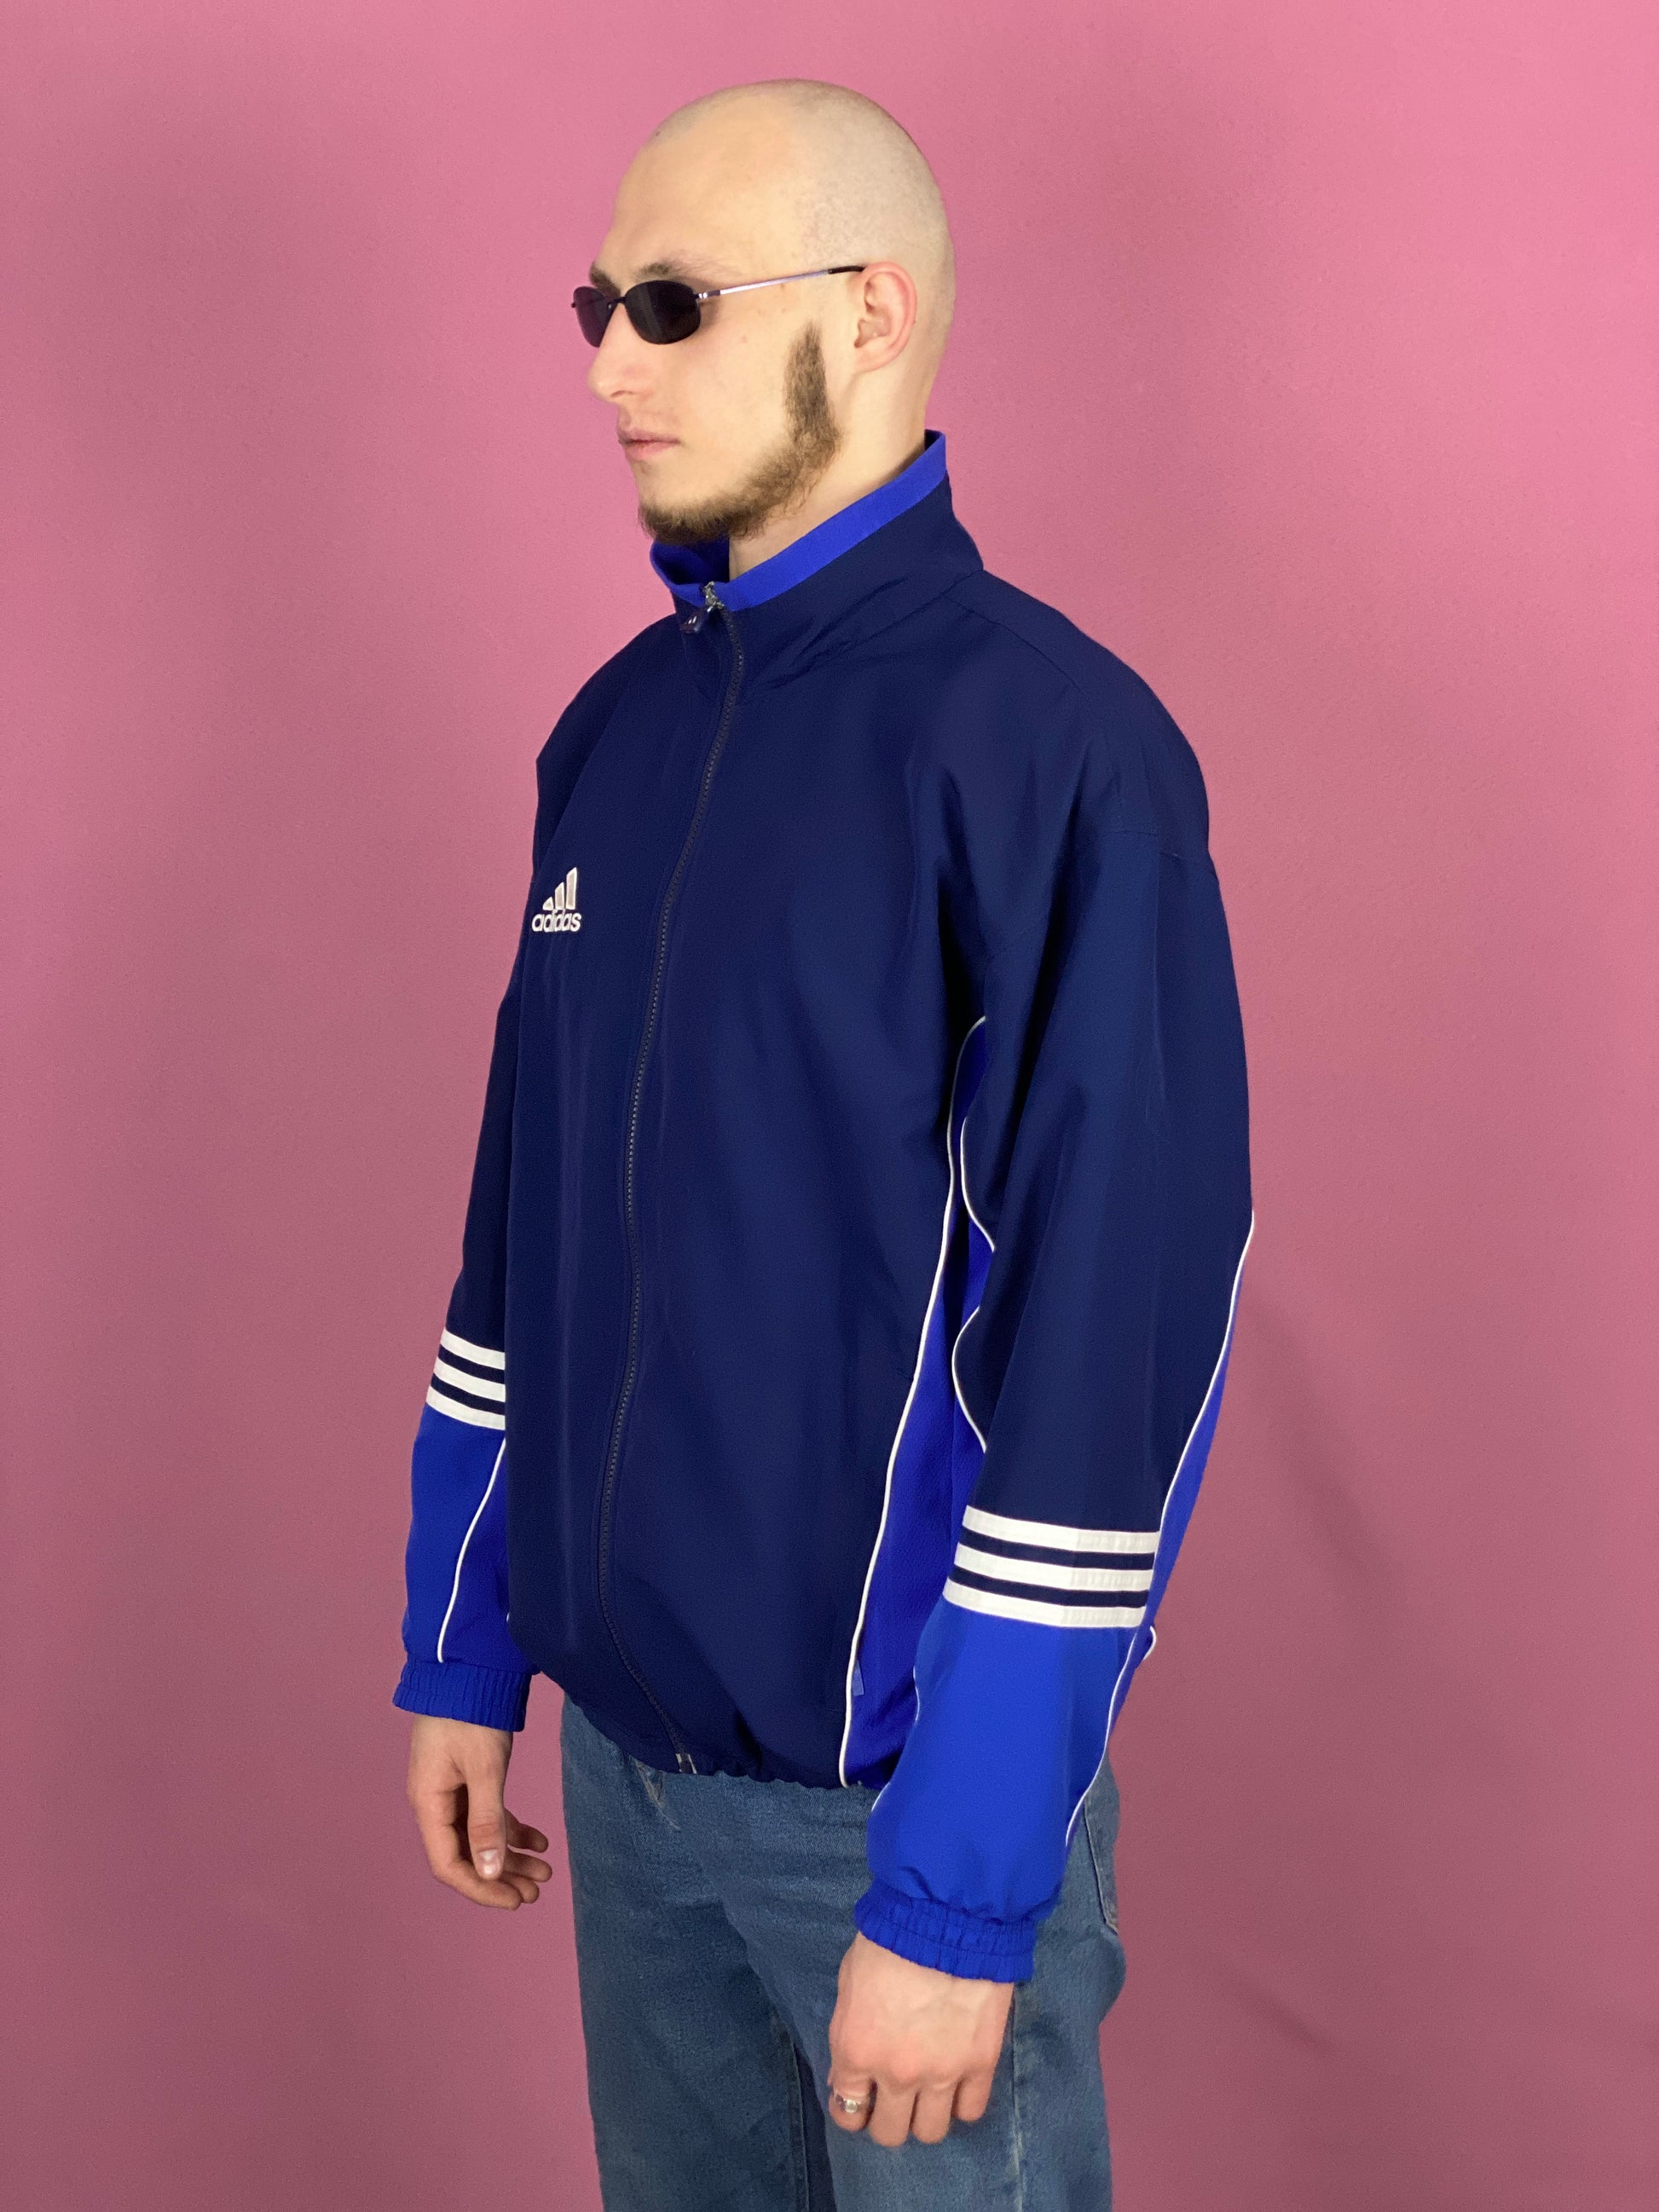 90s Adidas Vintage Men's Windbreaker Jacket - M Navy Blue Polyester